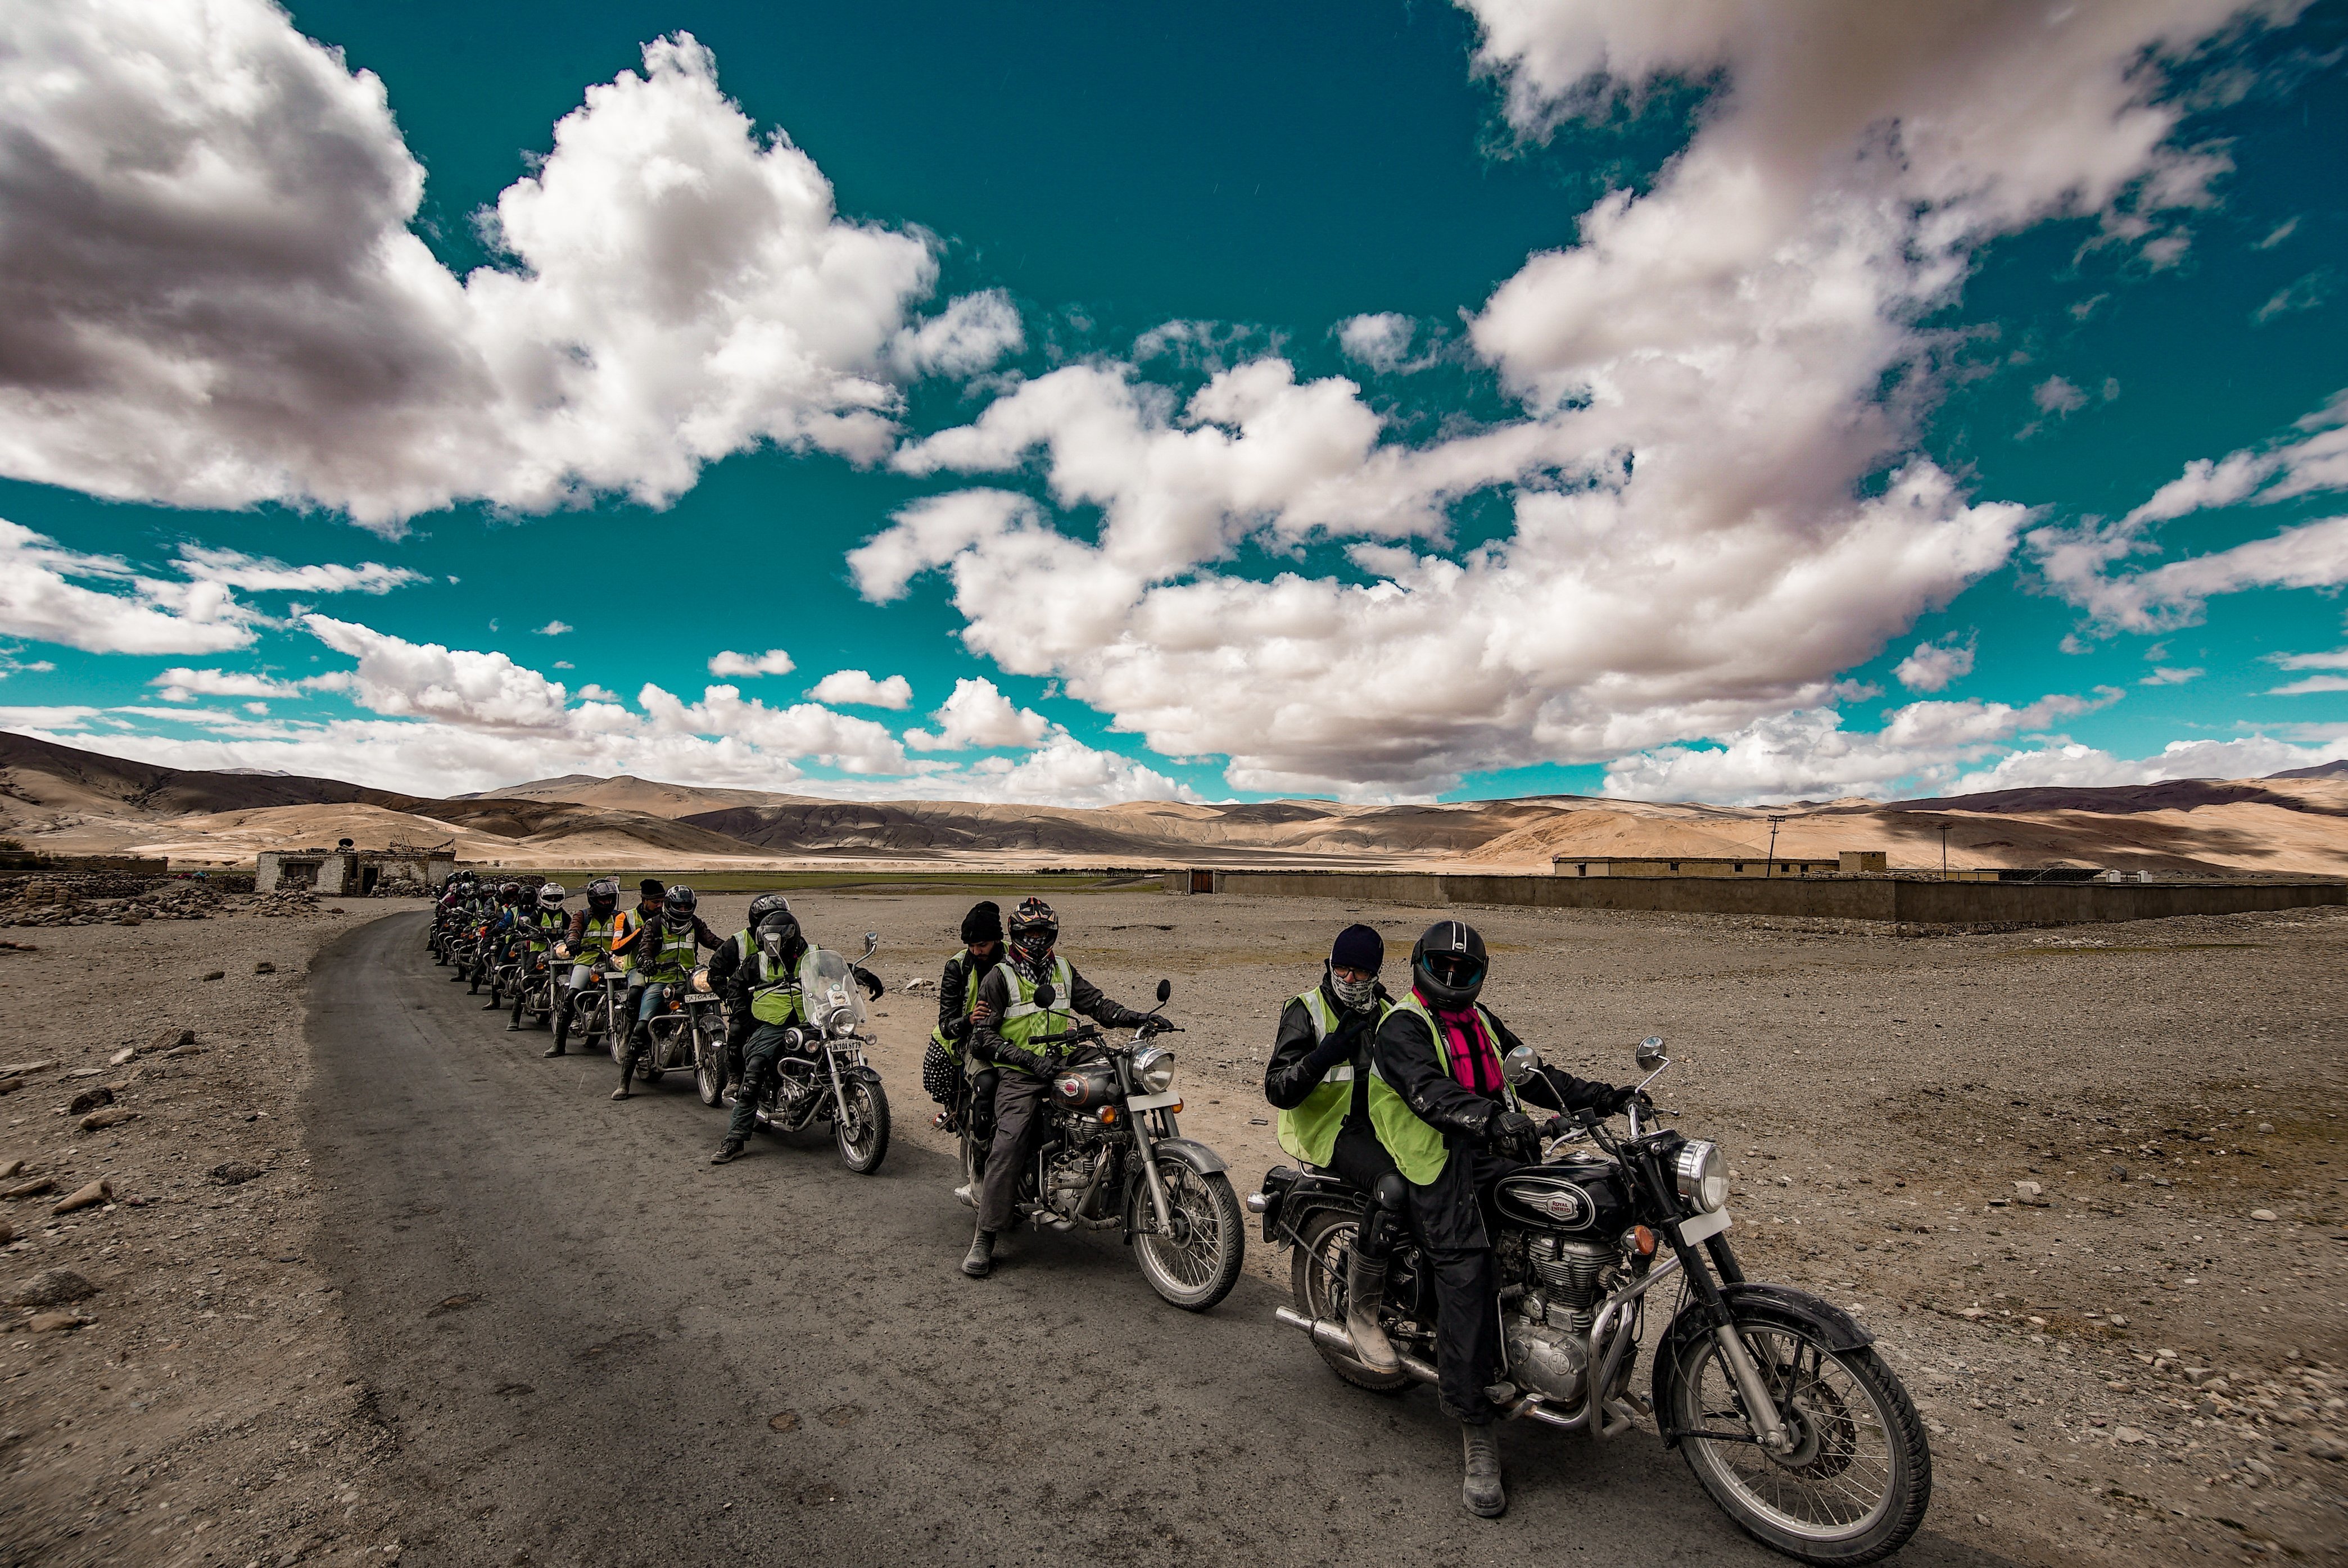 ladakh bike trip captions for instagram